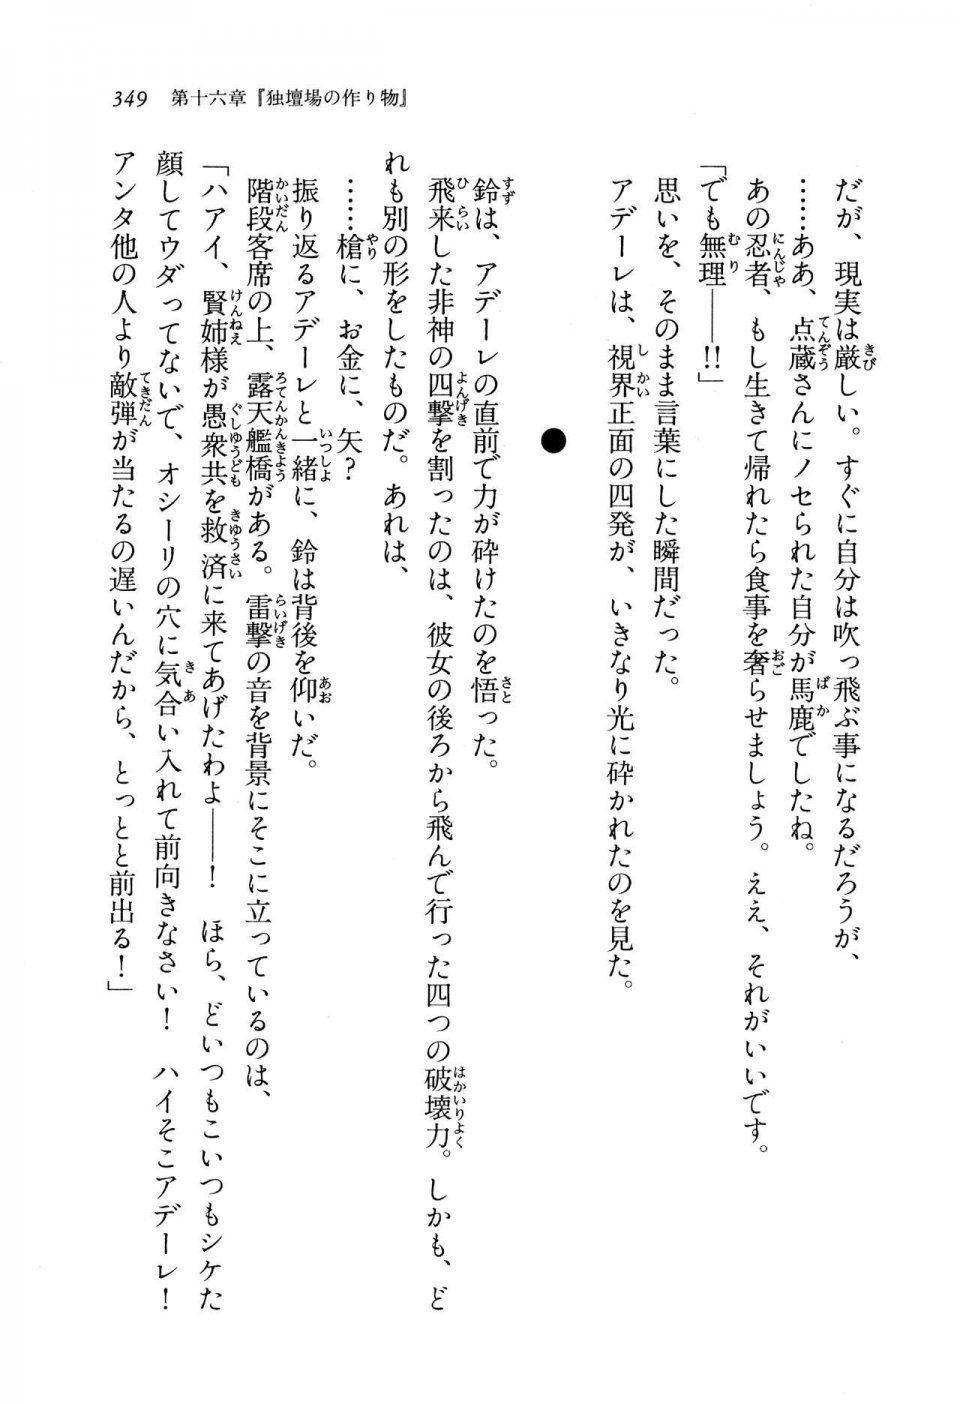 Kyoukai Senjou no Horizon BD Special Mininovel Vol 8(4B) - Photo #353